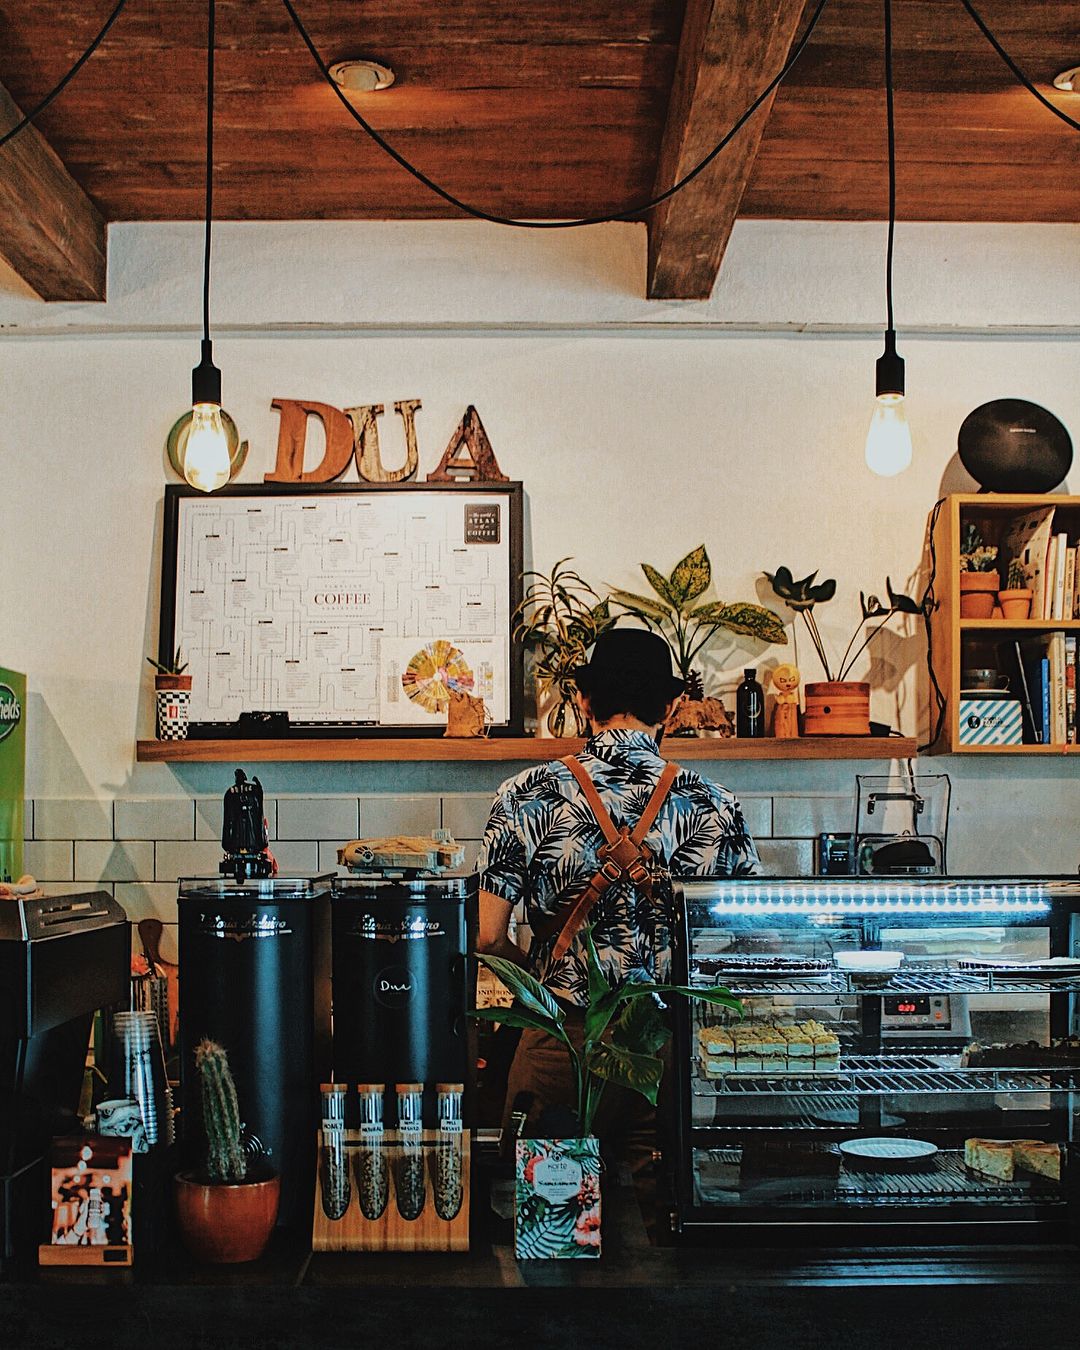 Harga Menu Dua Coffee Shop Cipete Image From @explorecoffeeshop